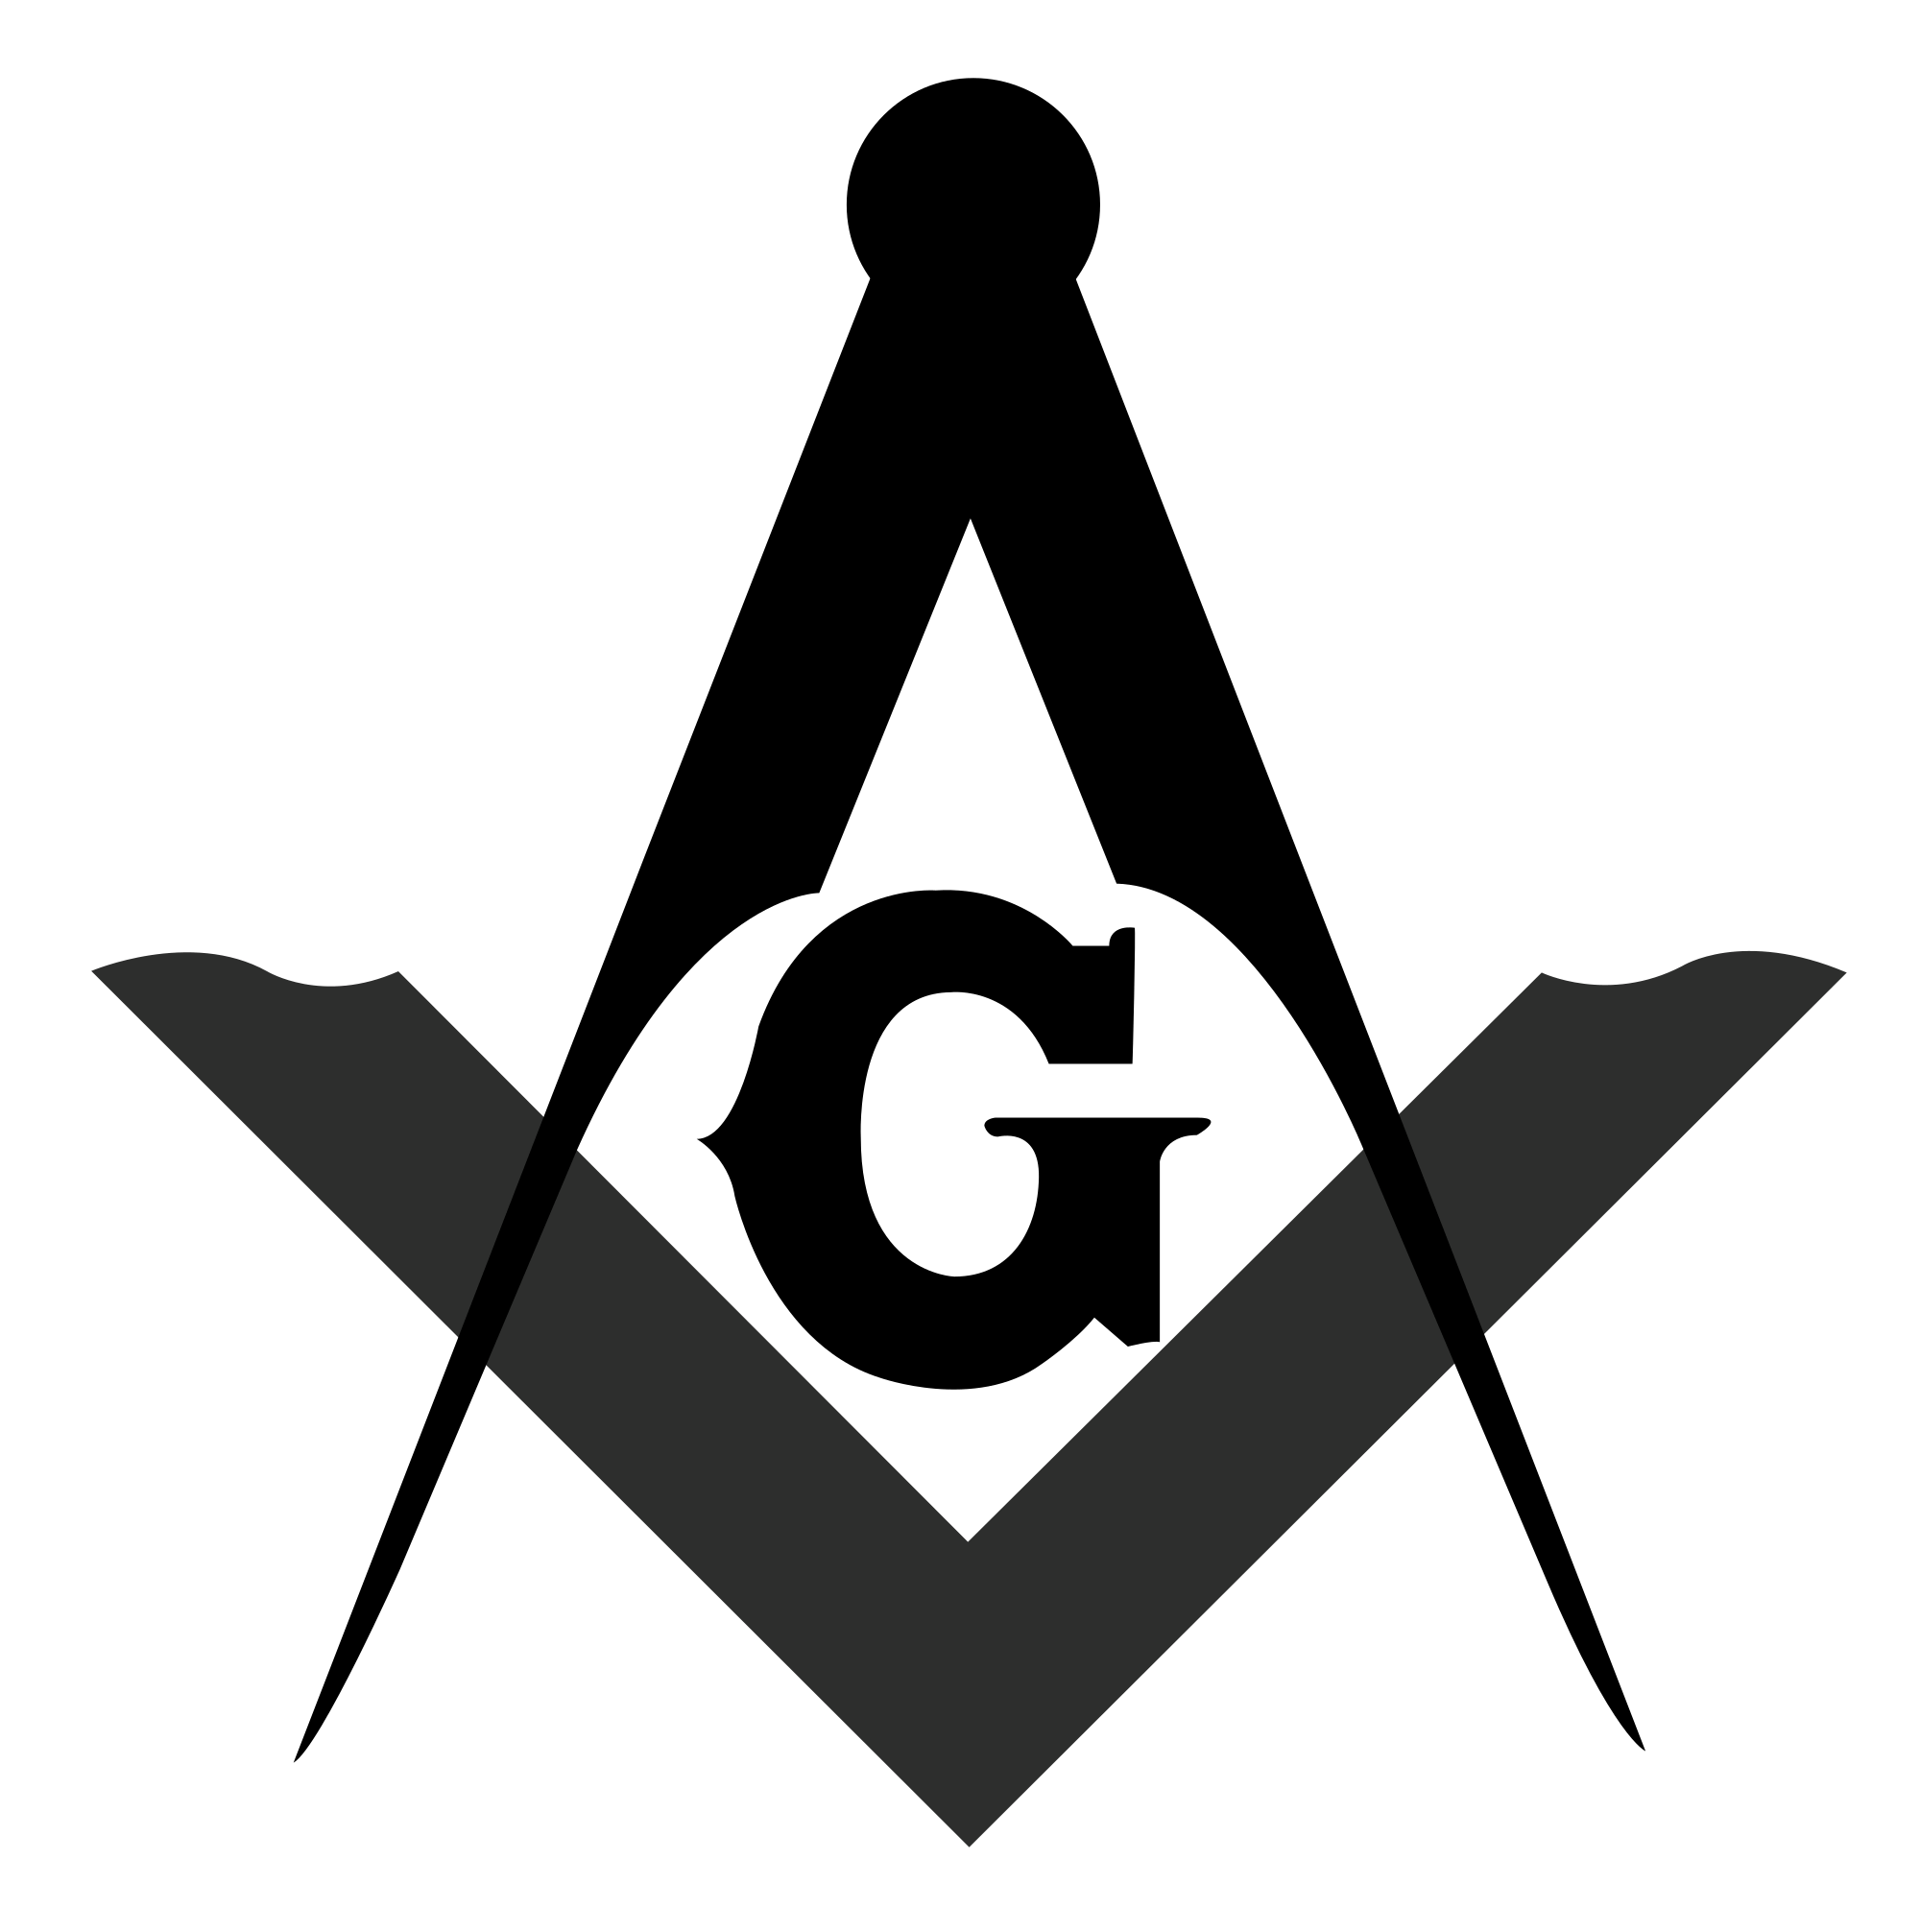 Freemason Logo - Square and Compasses